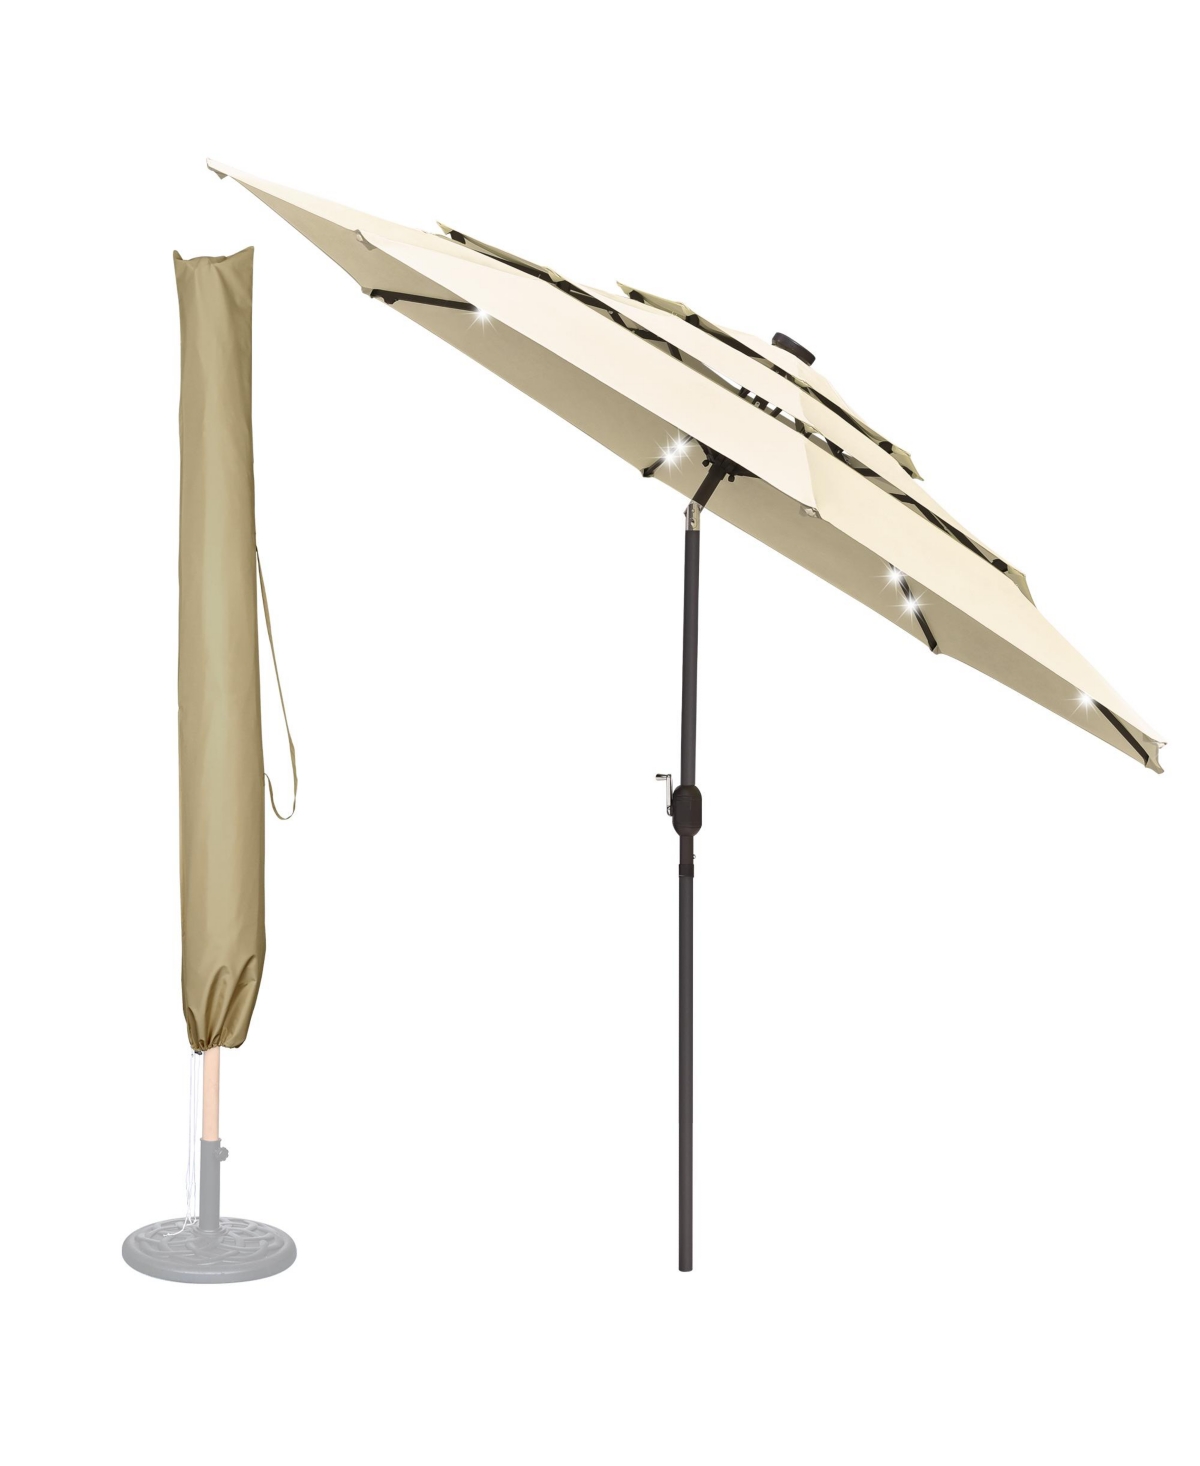 11 Ft 3 Tier Patio Umbrella with Protective Cover Solar Led Crank & Tilt Outdoor - Beige  tan